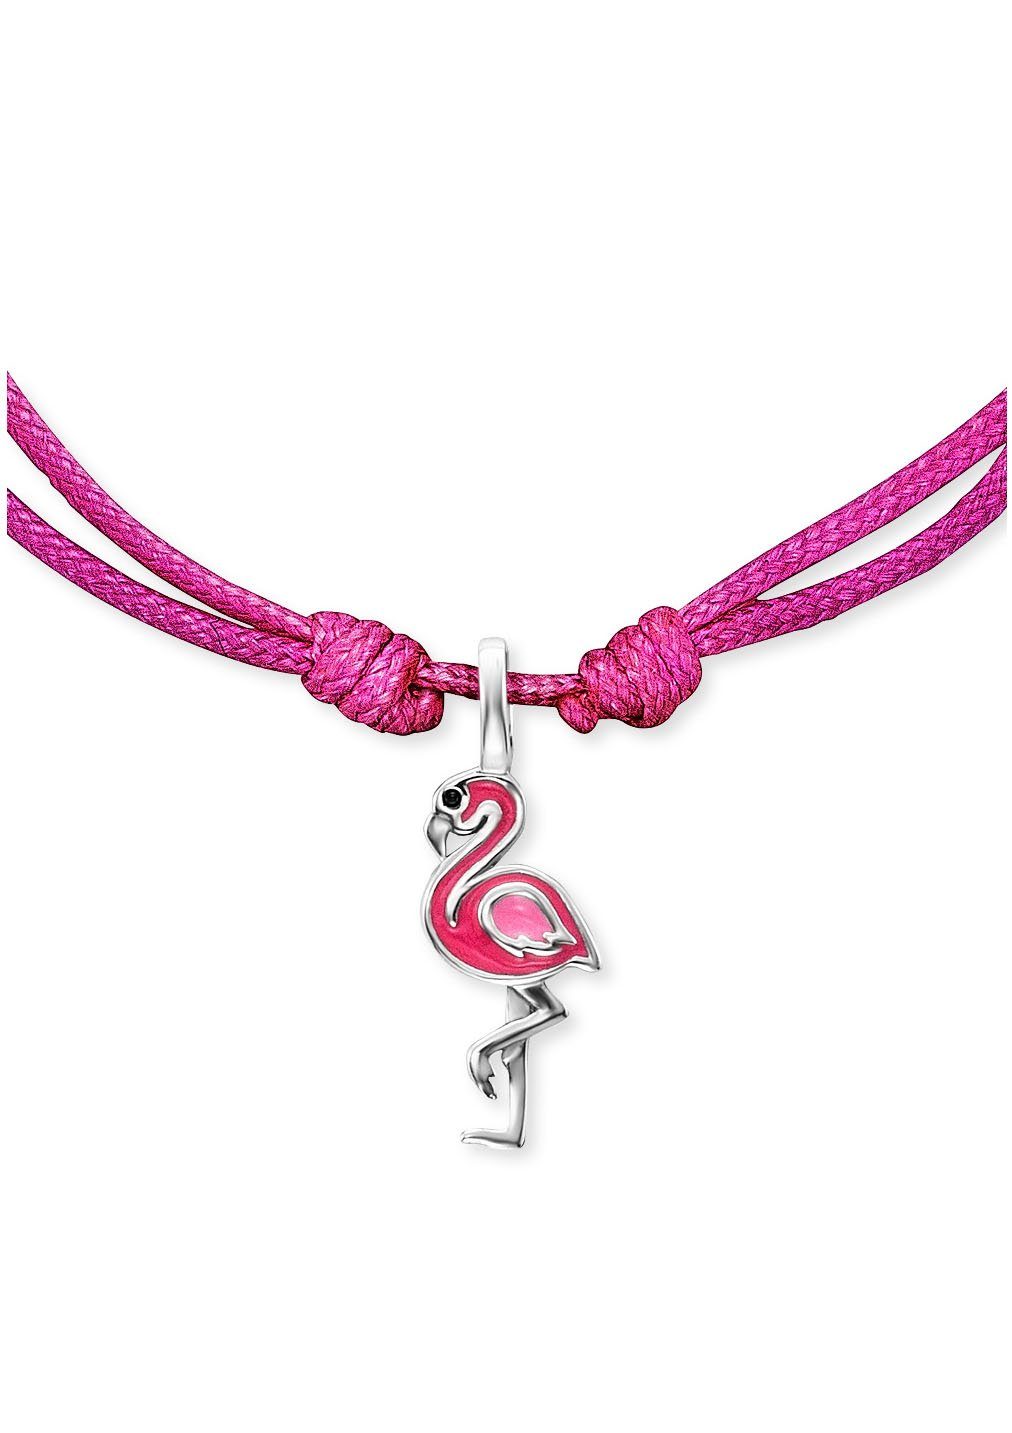 Herzengel Armband Flamingo, HEB-FLAMINGO, Emaille mit